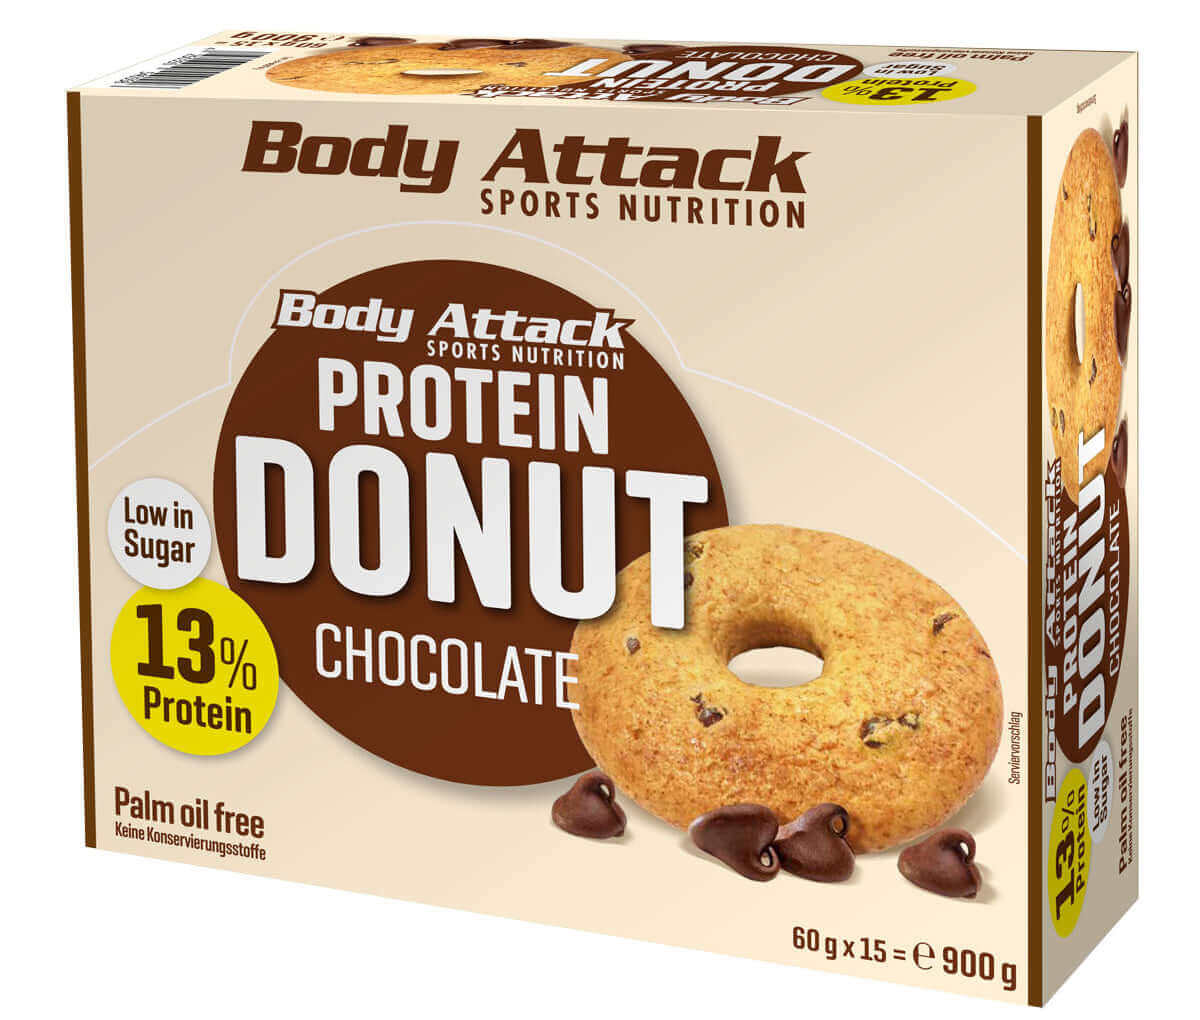 Protein donut 60g Chocolat Body Attack Sports Nutrition